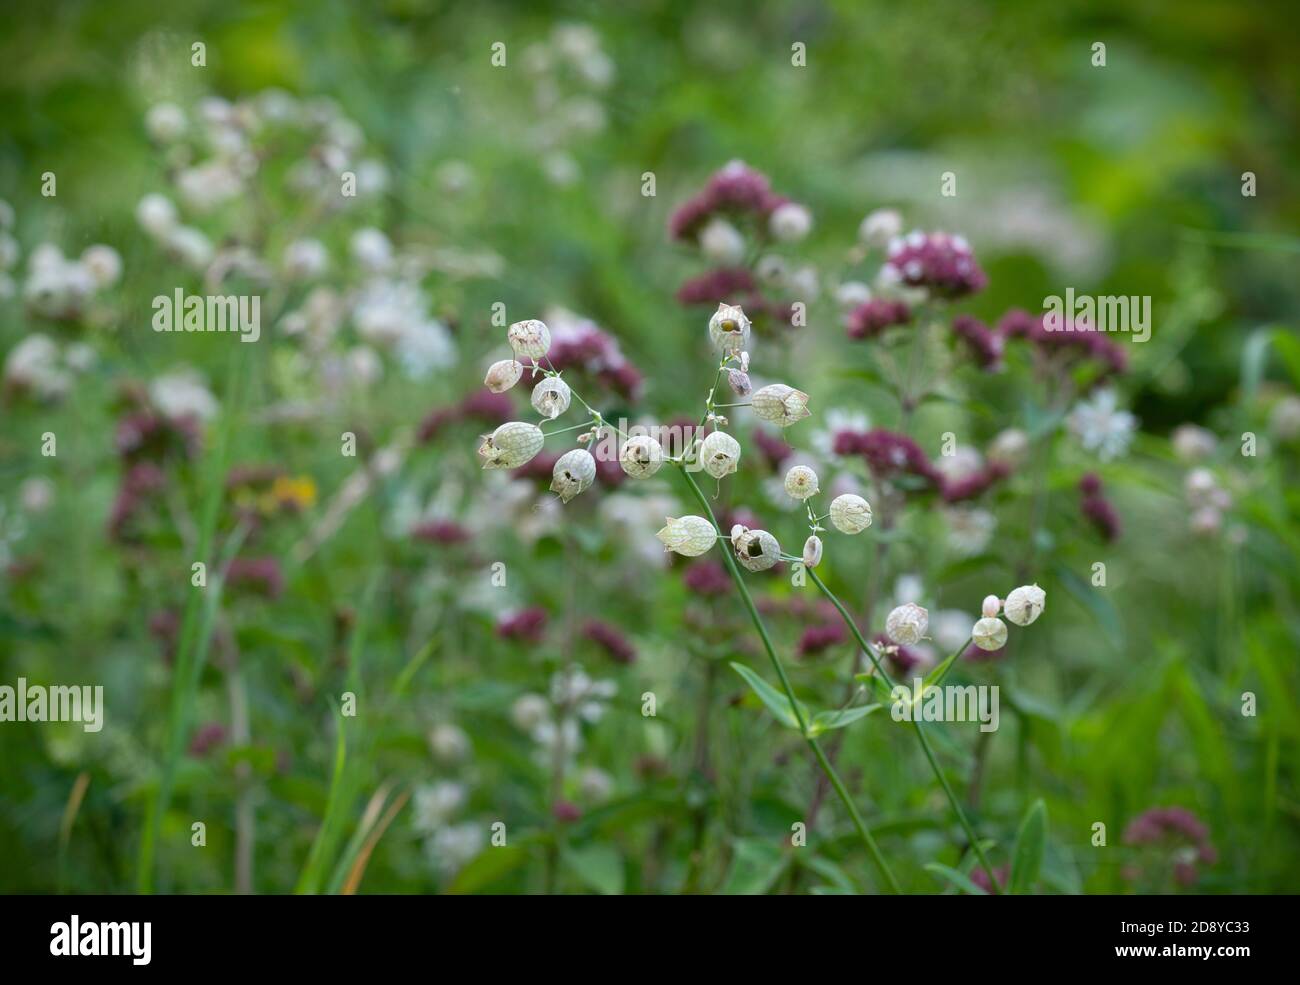 Bladder campion flowers. Silene vulgaris (Moench) Garcke - field flowers Stock Photo